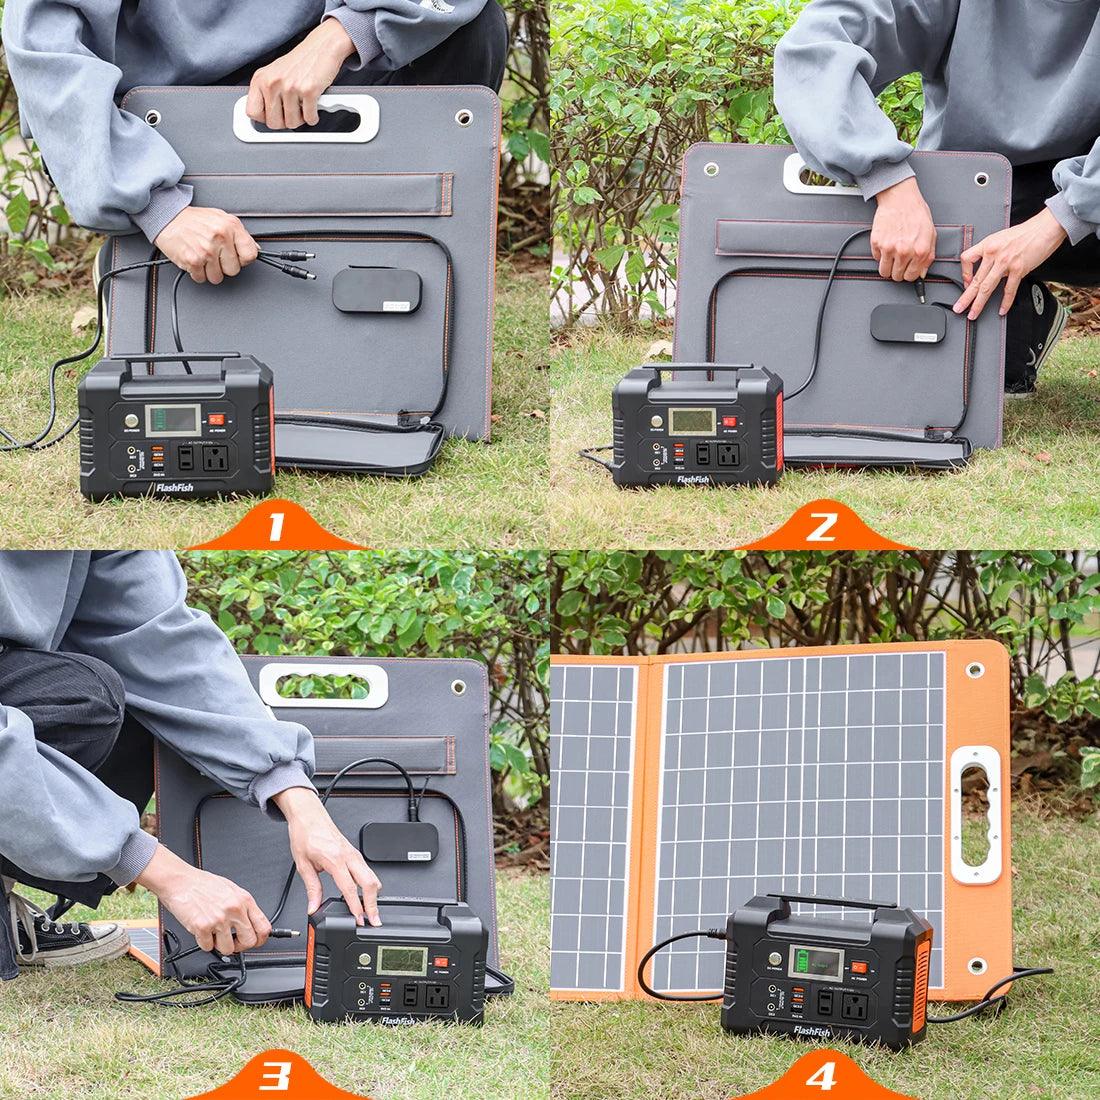 FlashFish Portable Solar Power Station Set 120W with 60W Solar Panel - Inverted Powers